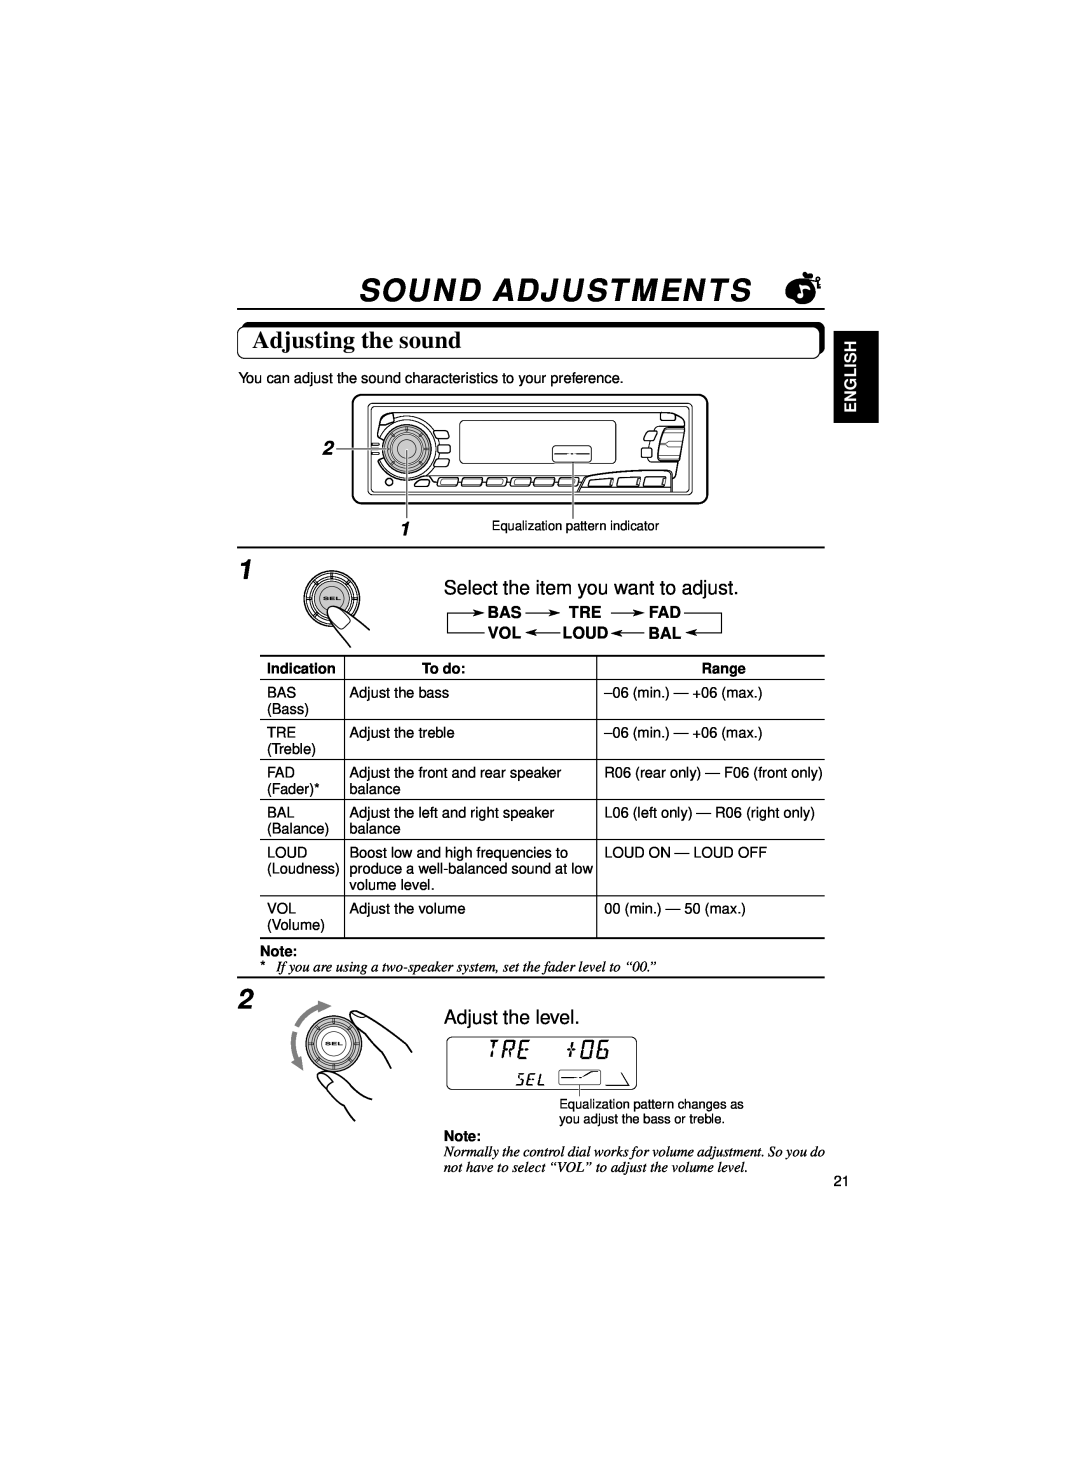 JVC KS-FX820R Sound Adjustments, Adjusting the sound, Select the item you want to adjust, Adjust the level, Loud, English 